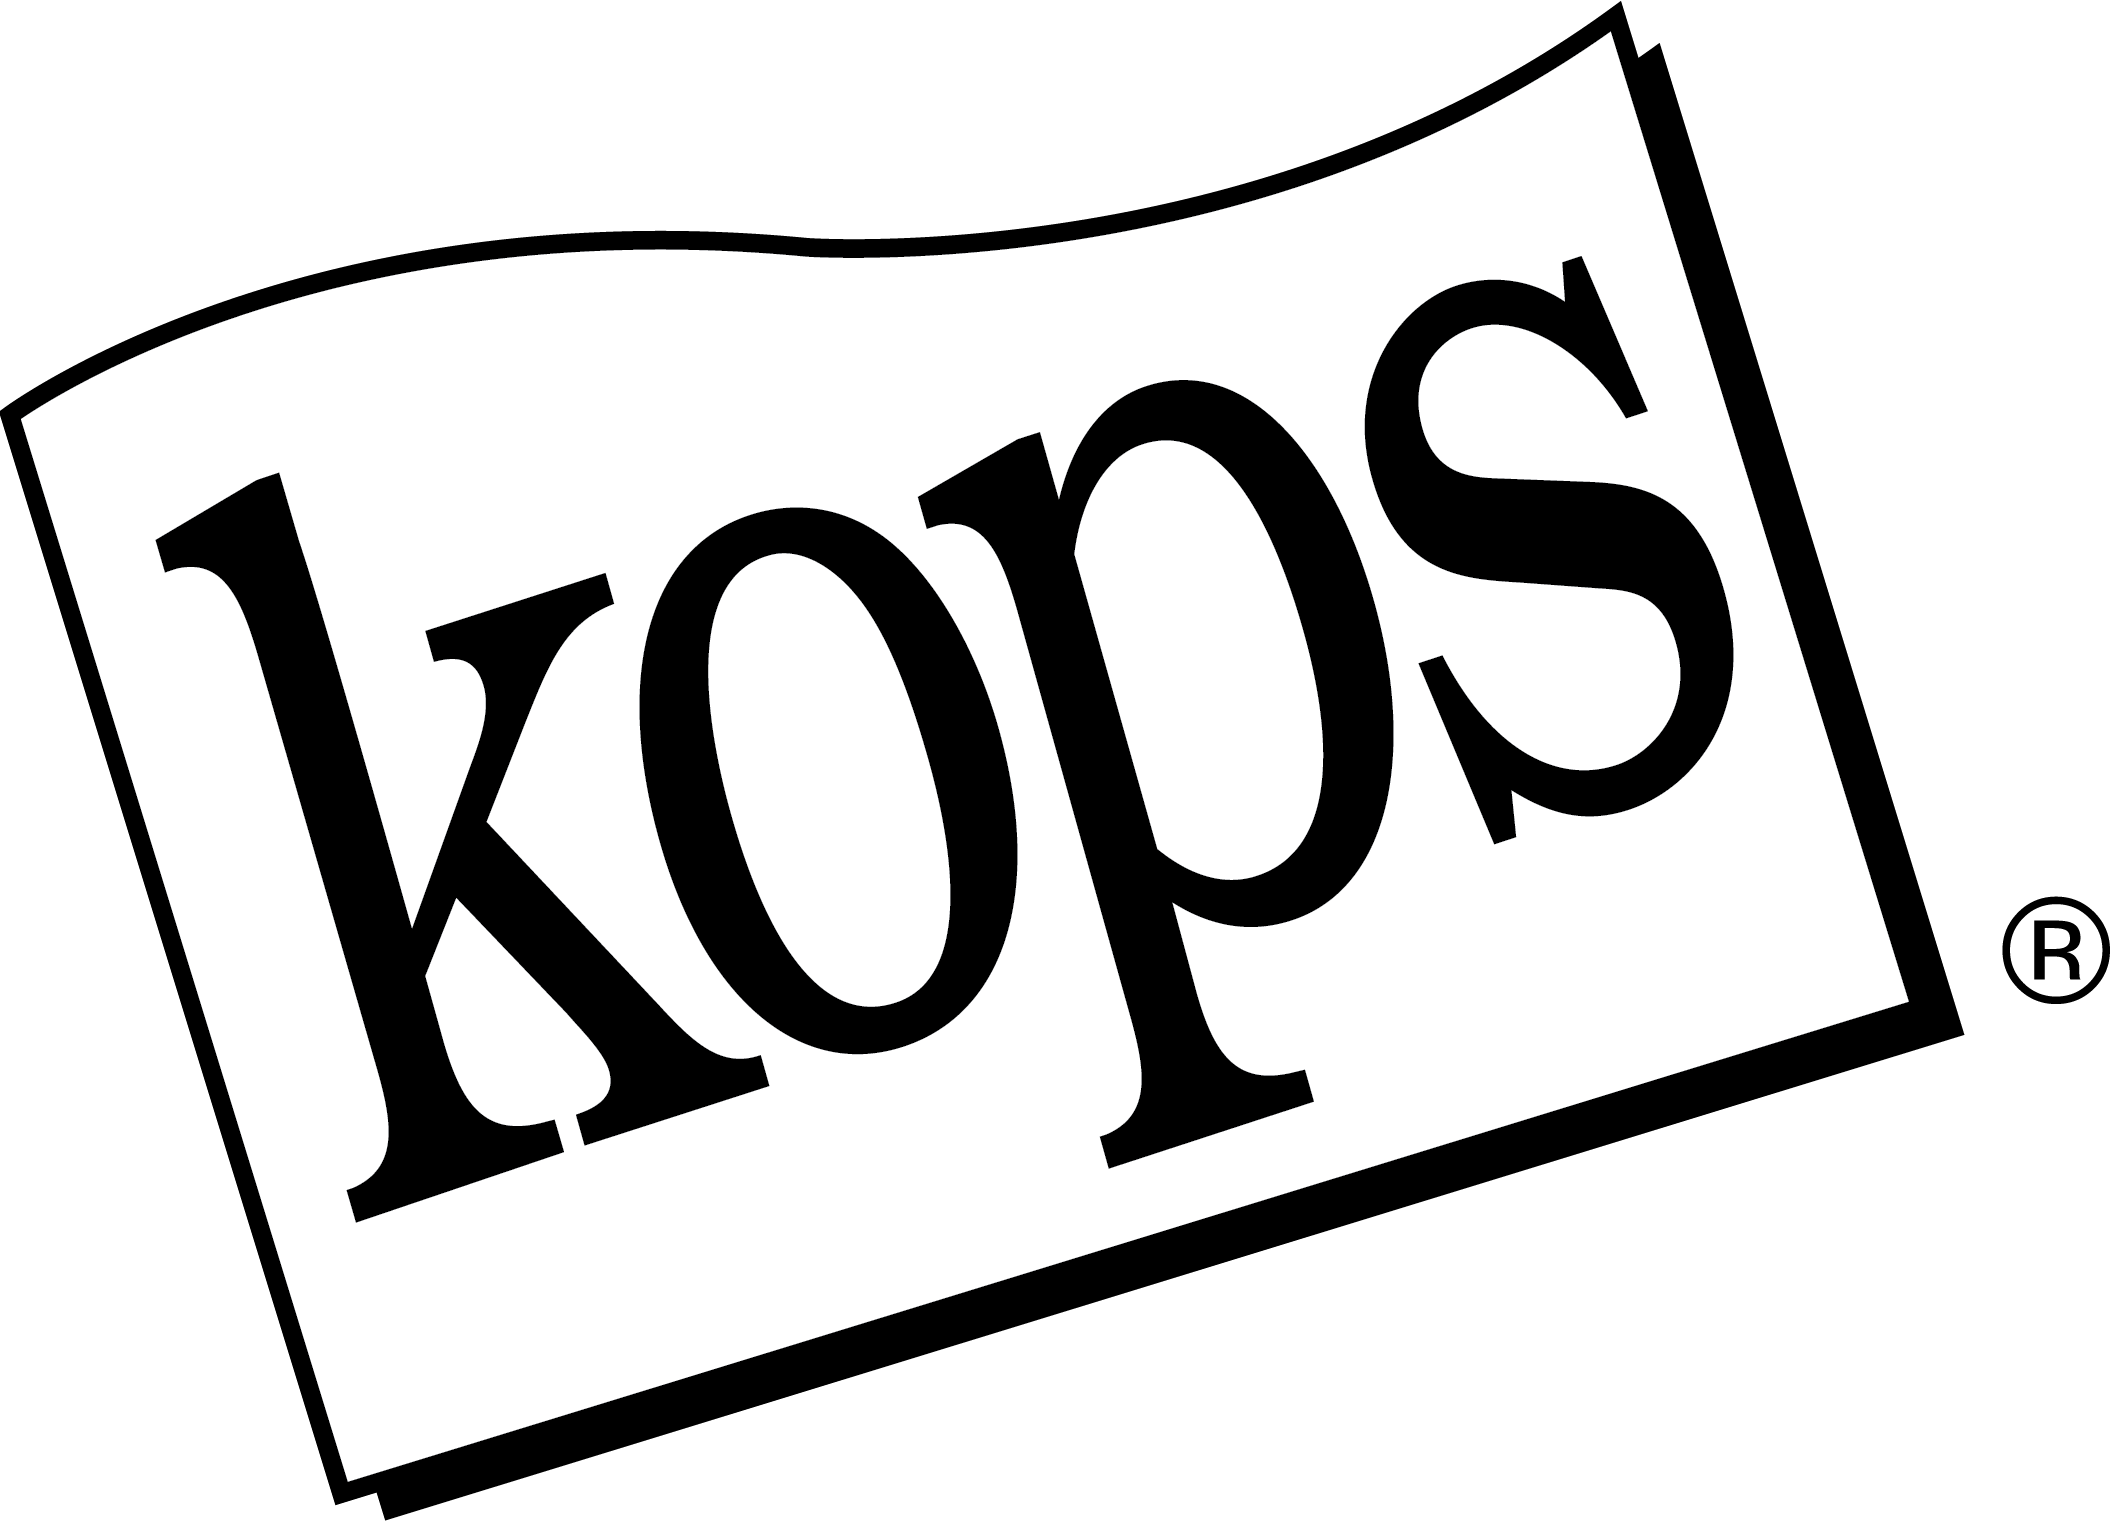 Kops Logo - Artwork and Logos